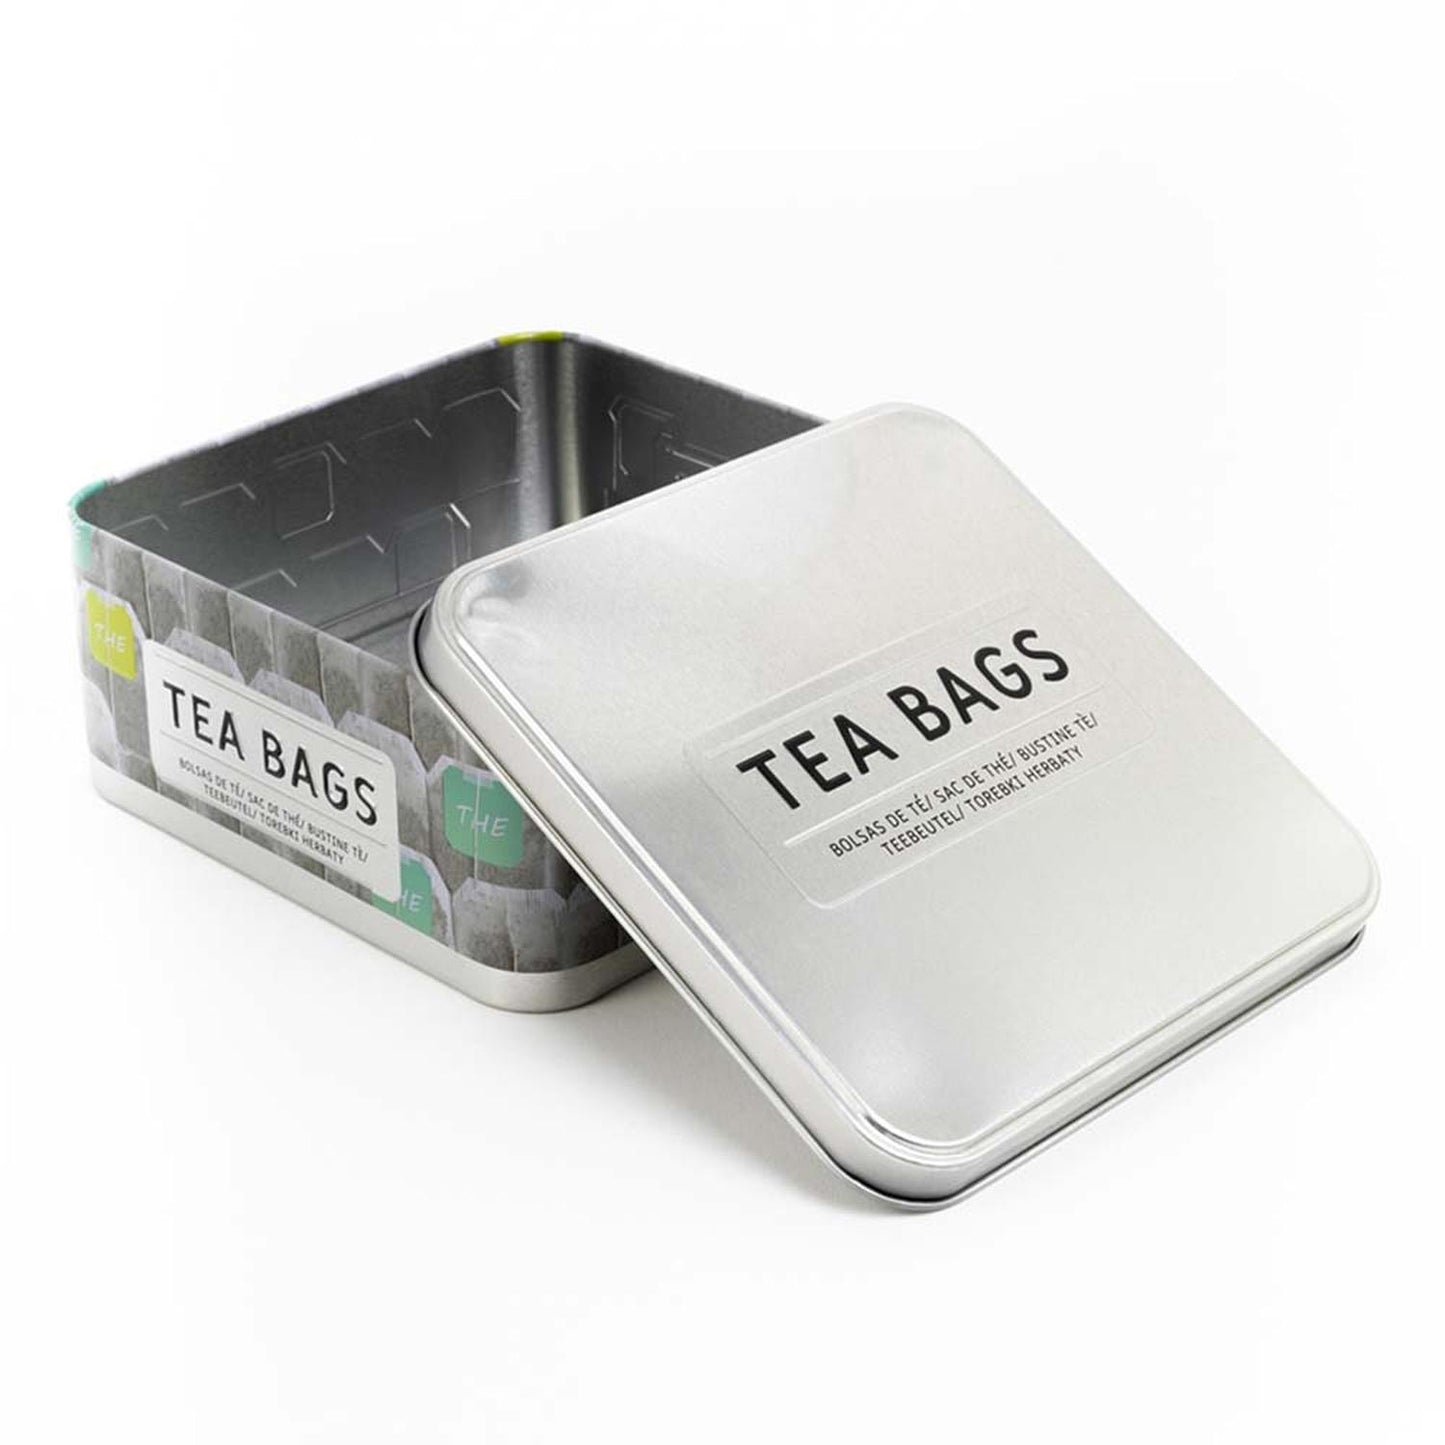 Lata cuadrada metálica con diseño "TEA BAGS"